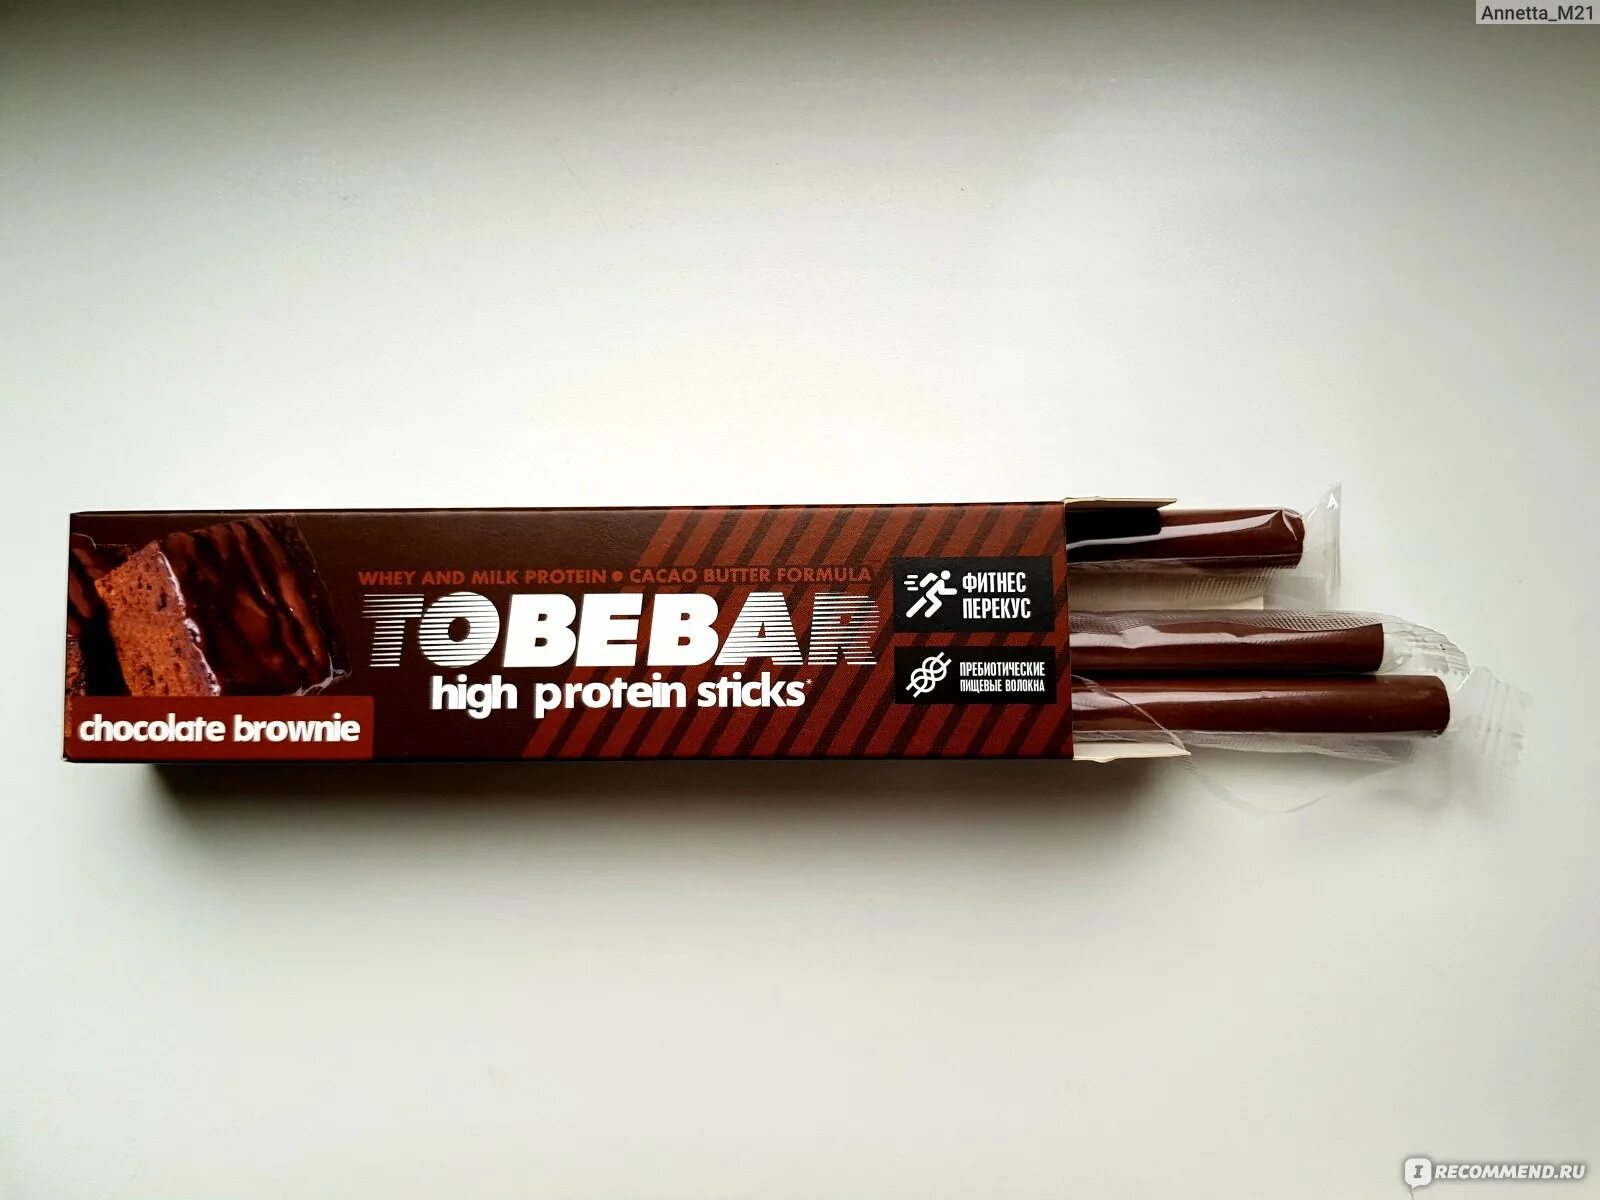 Choco sticks trap. Tobebar палочки. High Protein Sticks. Палочки протеиновые шоколадный Брауни 6 палочек tobebar 66 гр. Зещушт срщсщдфеу ещиуифк.